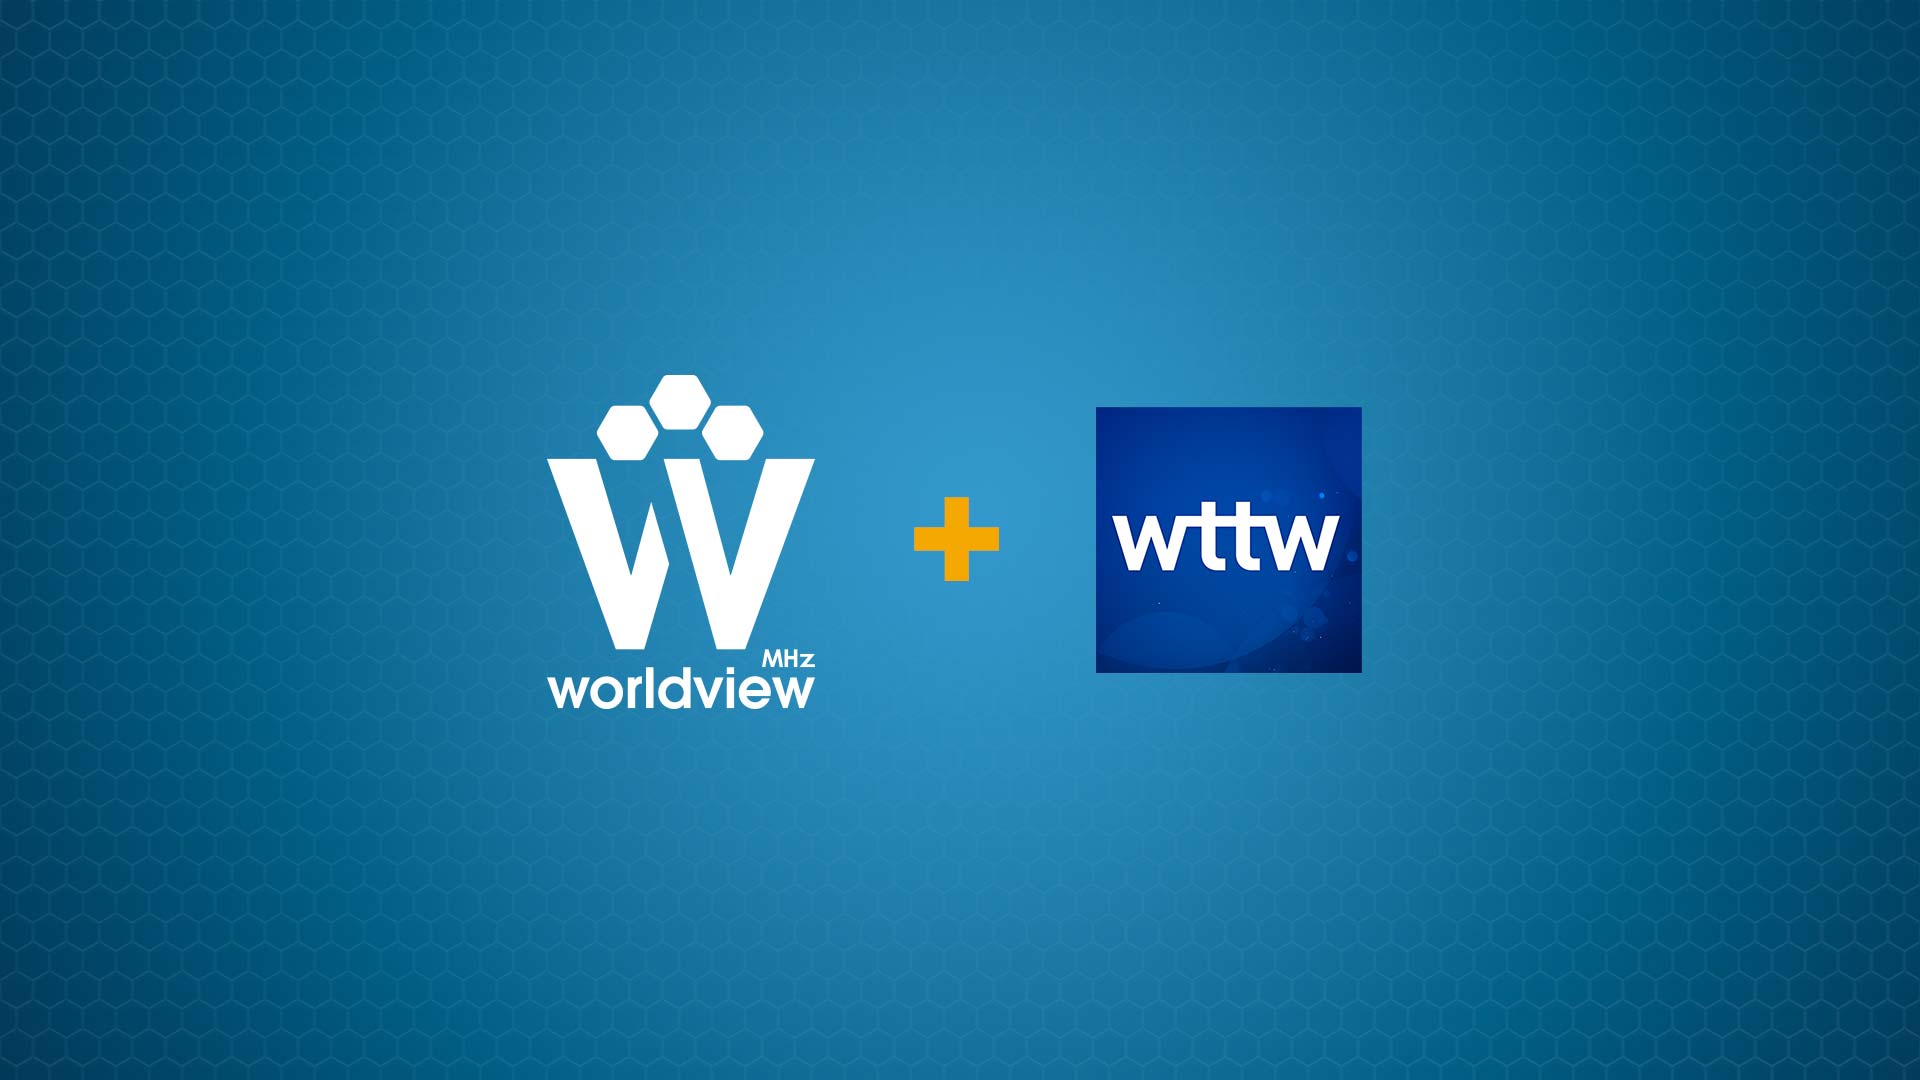 WTTW Logo - WV-plus-wttw-small-logos-announcement-1920x1080 |